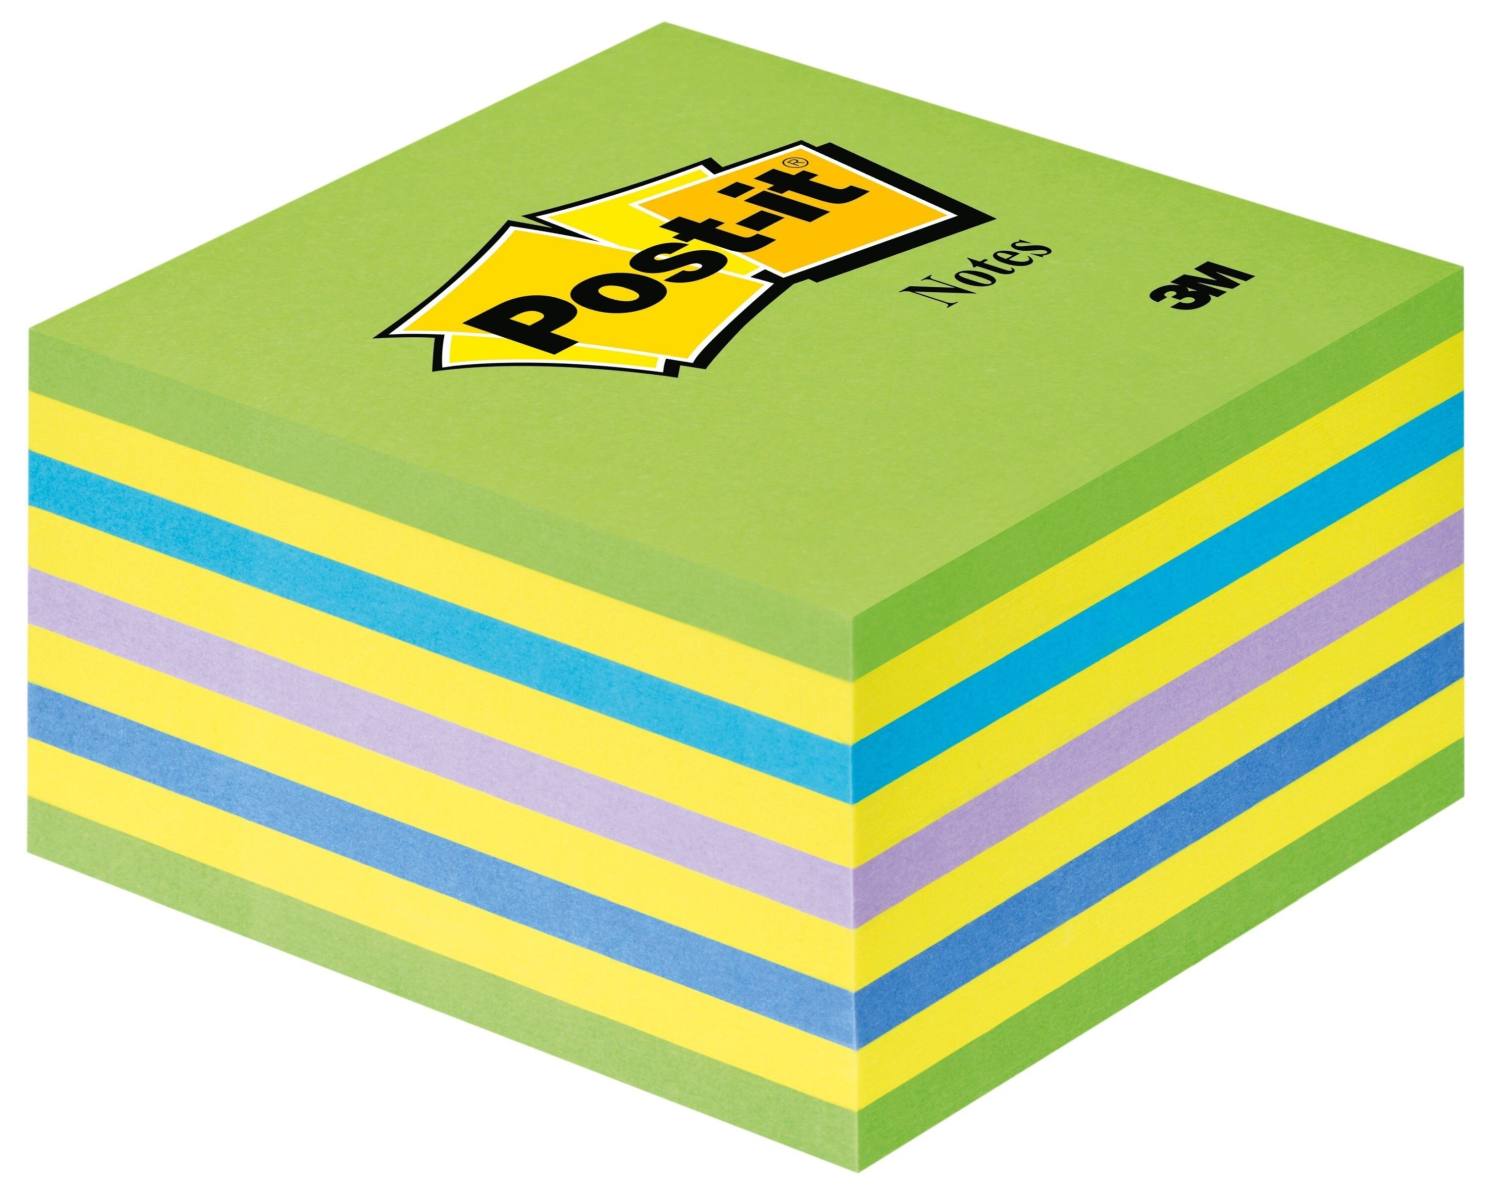 cubo 3M Post-it 2028NB, 76 mm x 76 mm, giallo, blu neon, verde neon, 1 cubo da 450 fogli